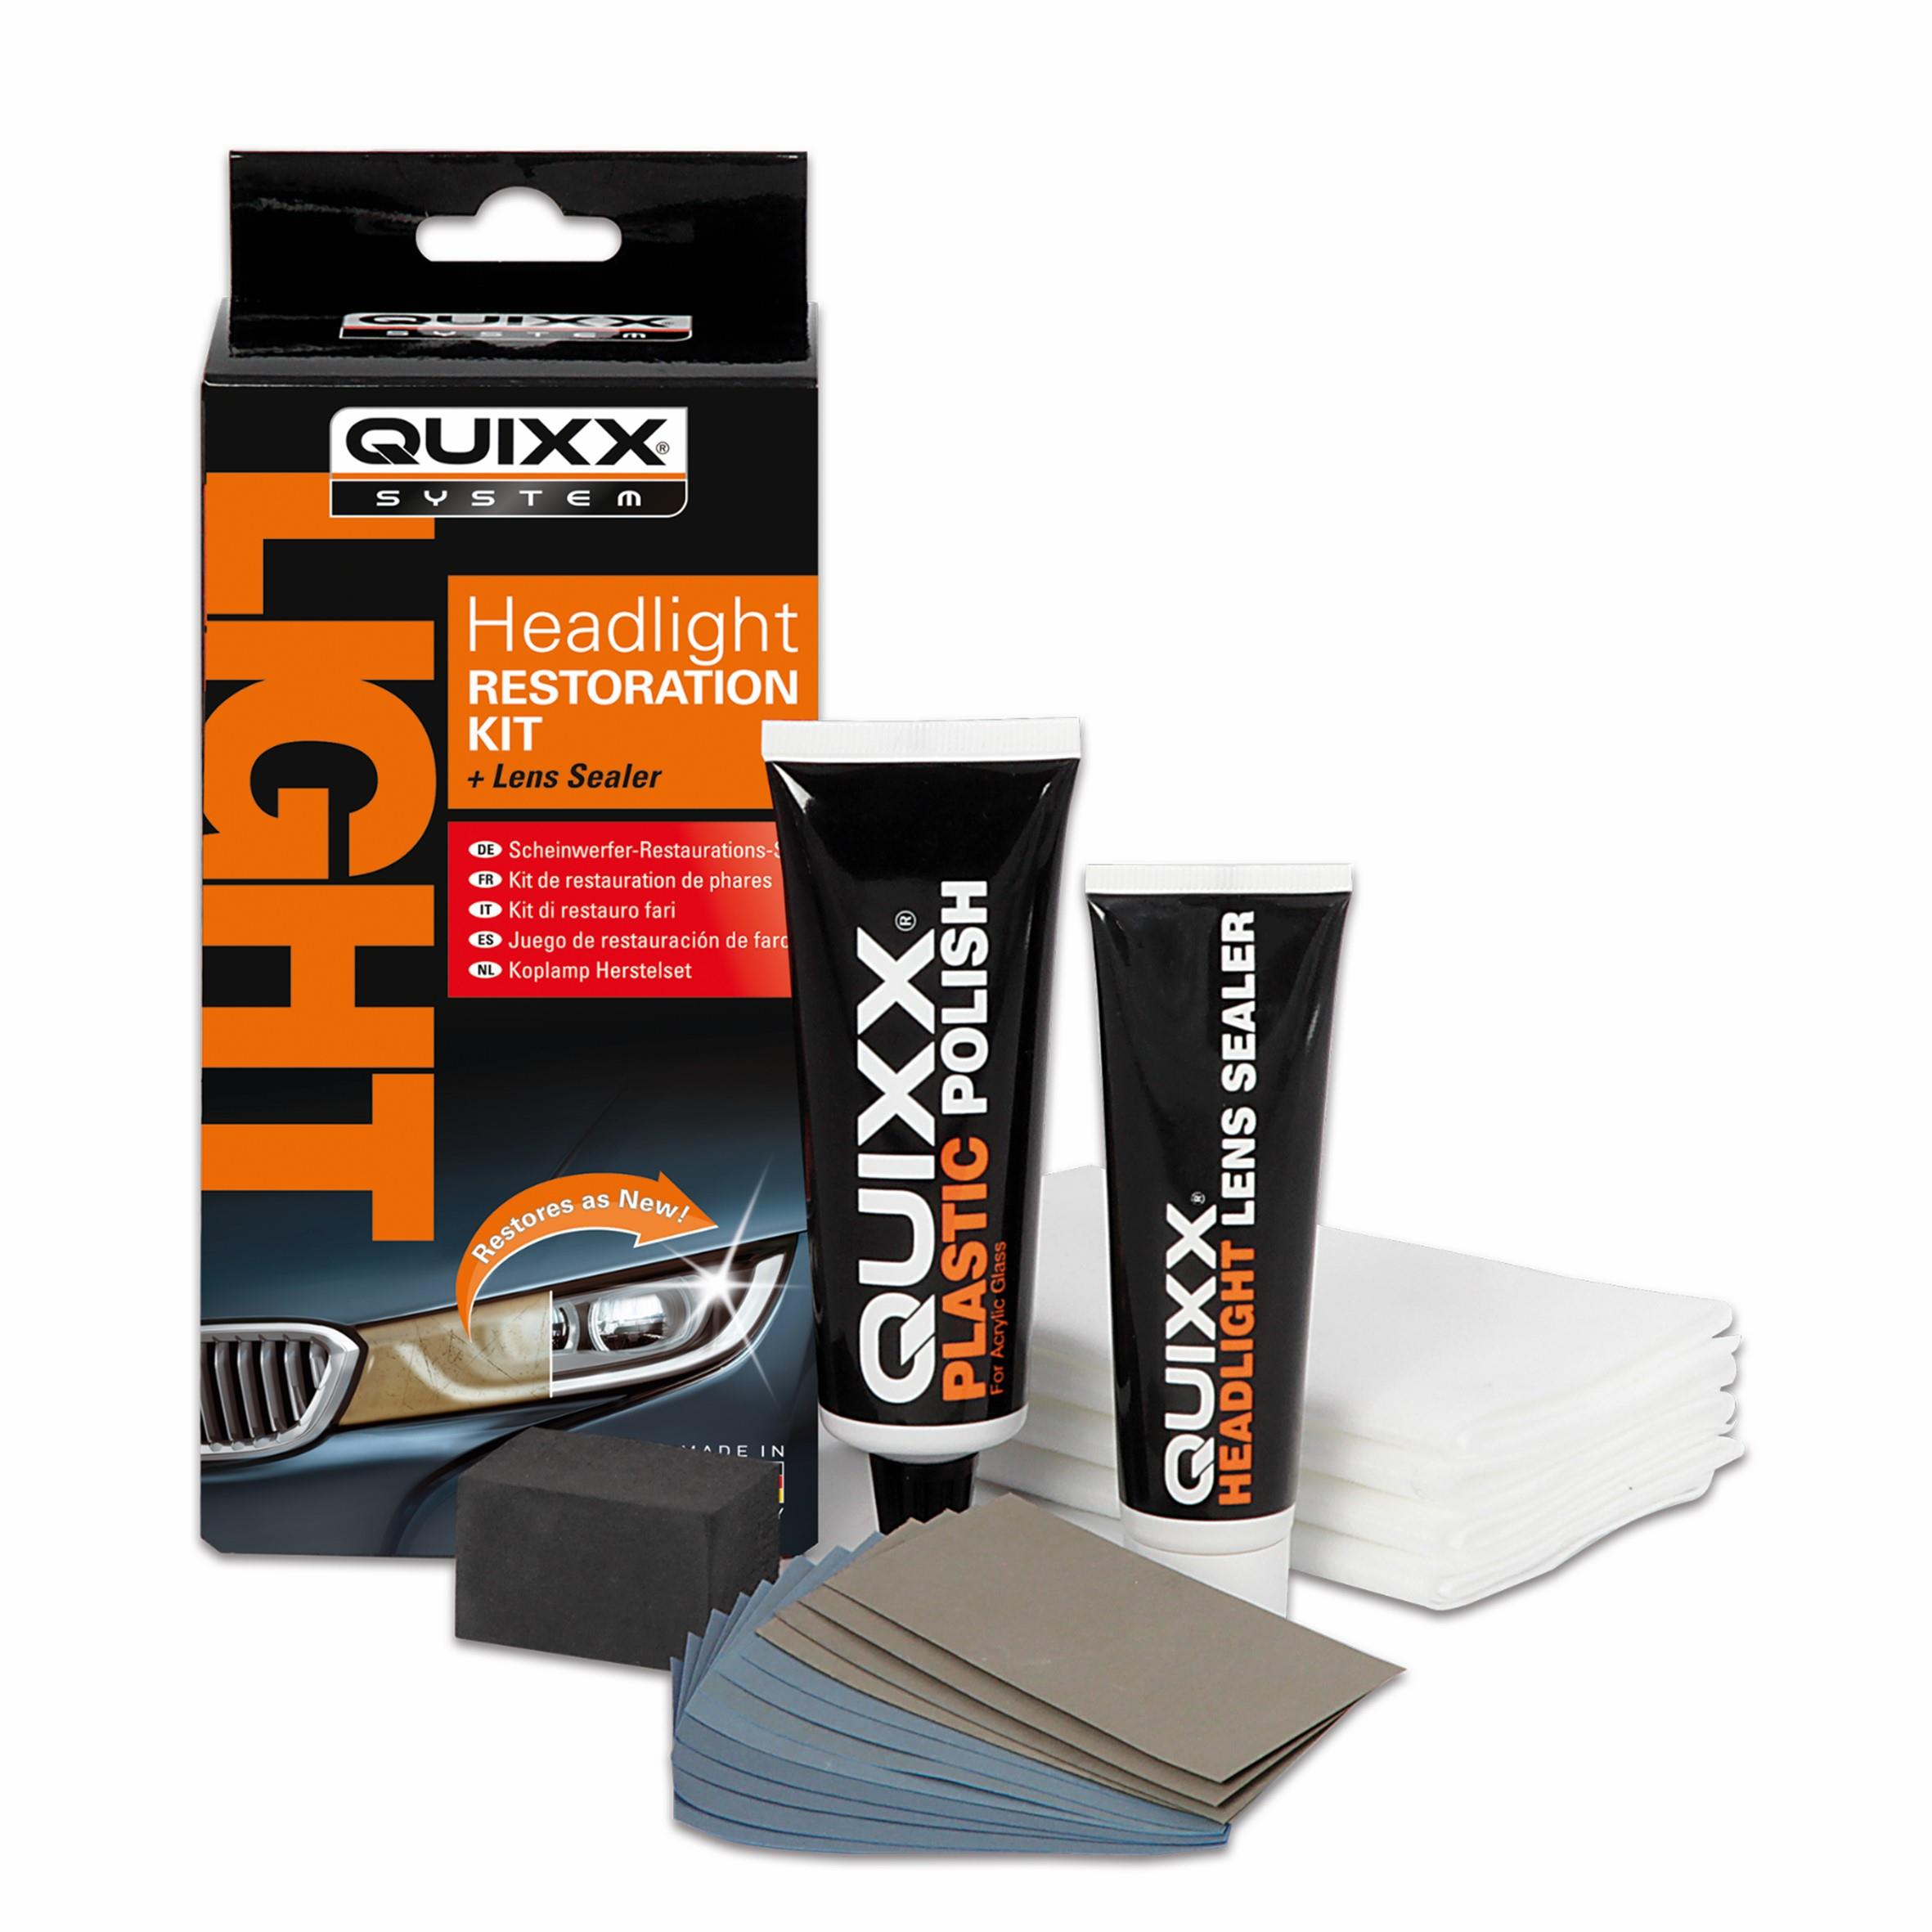 QUIXX Headlight Restoration Kit